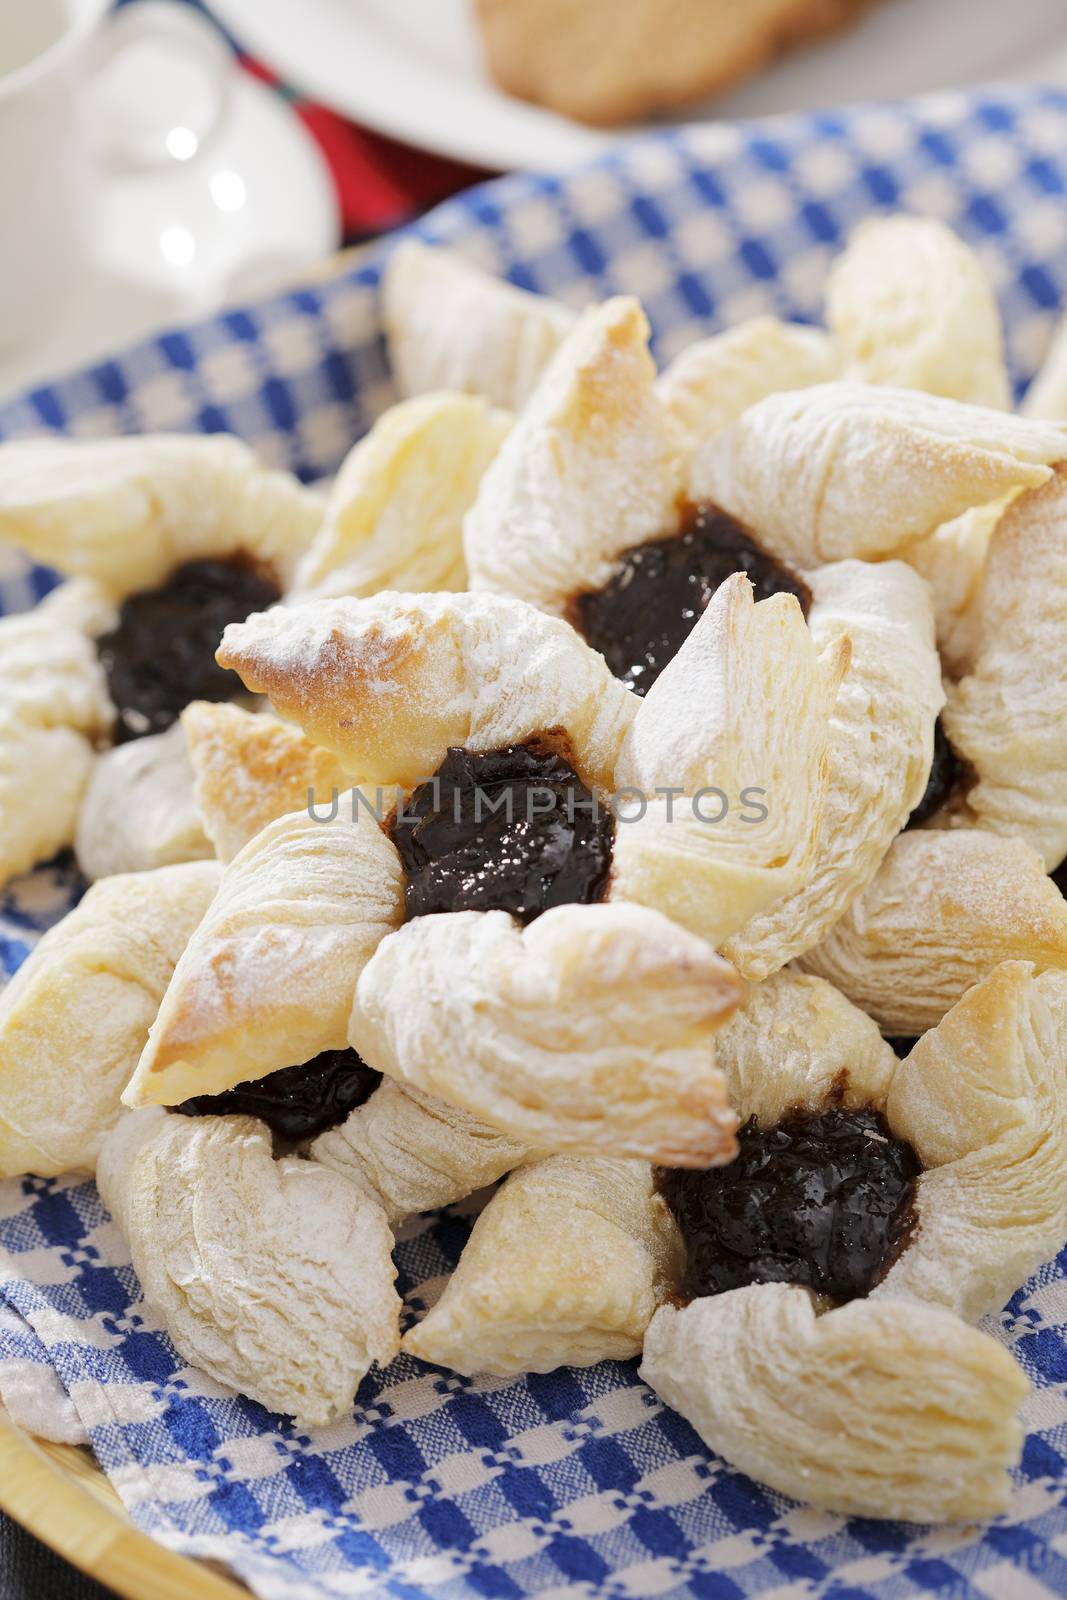 Finnish christmastime puff pastries with dried plum marmalade, Joulutorttu